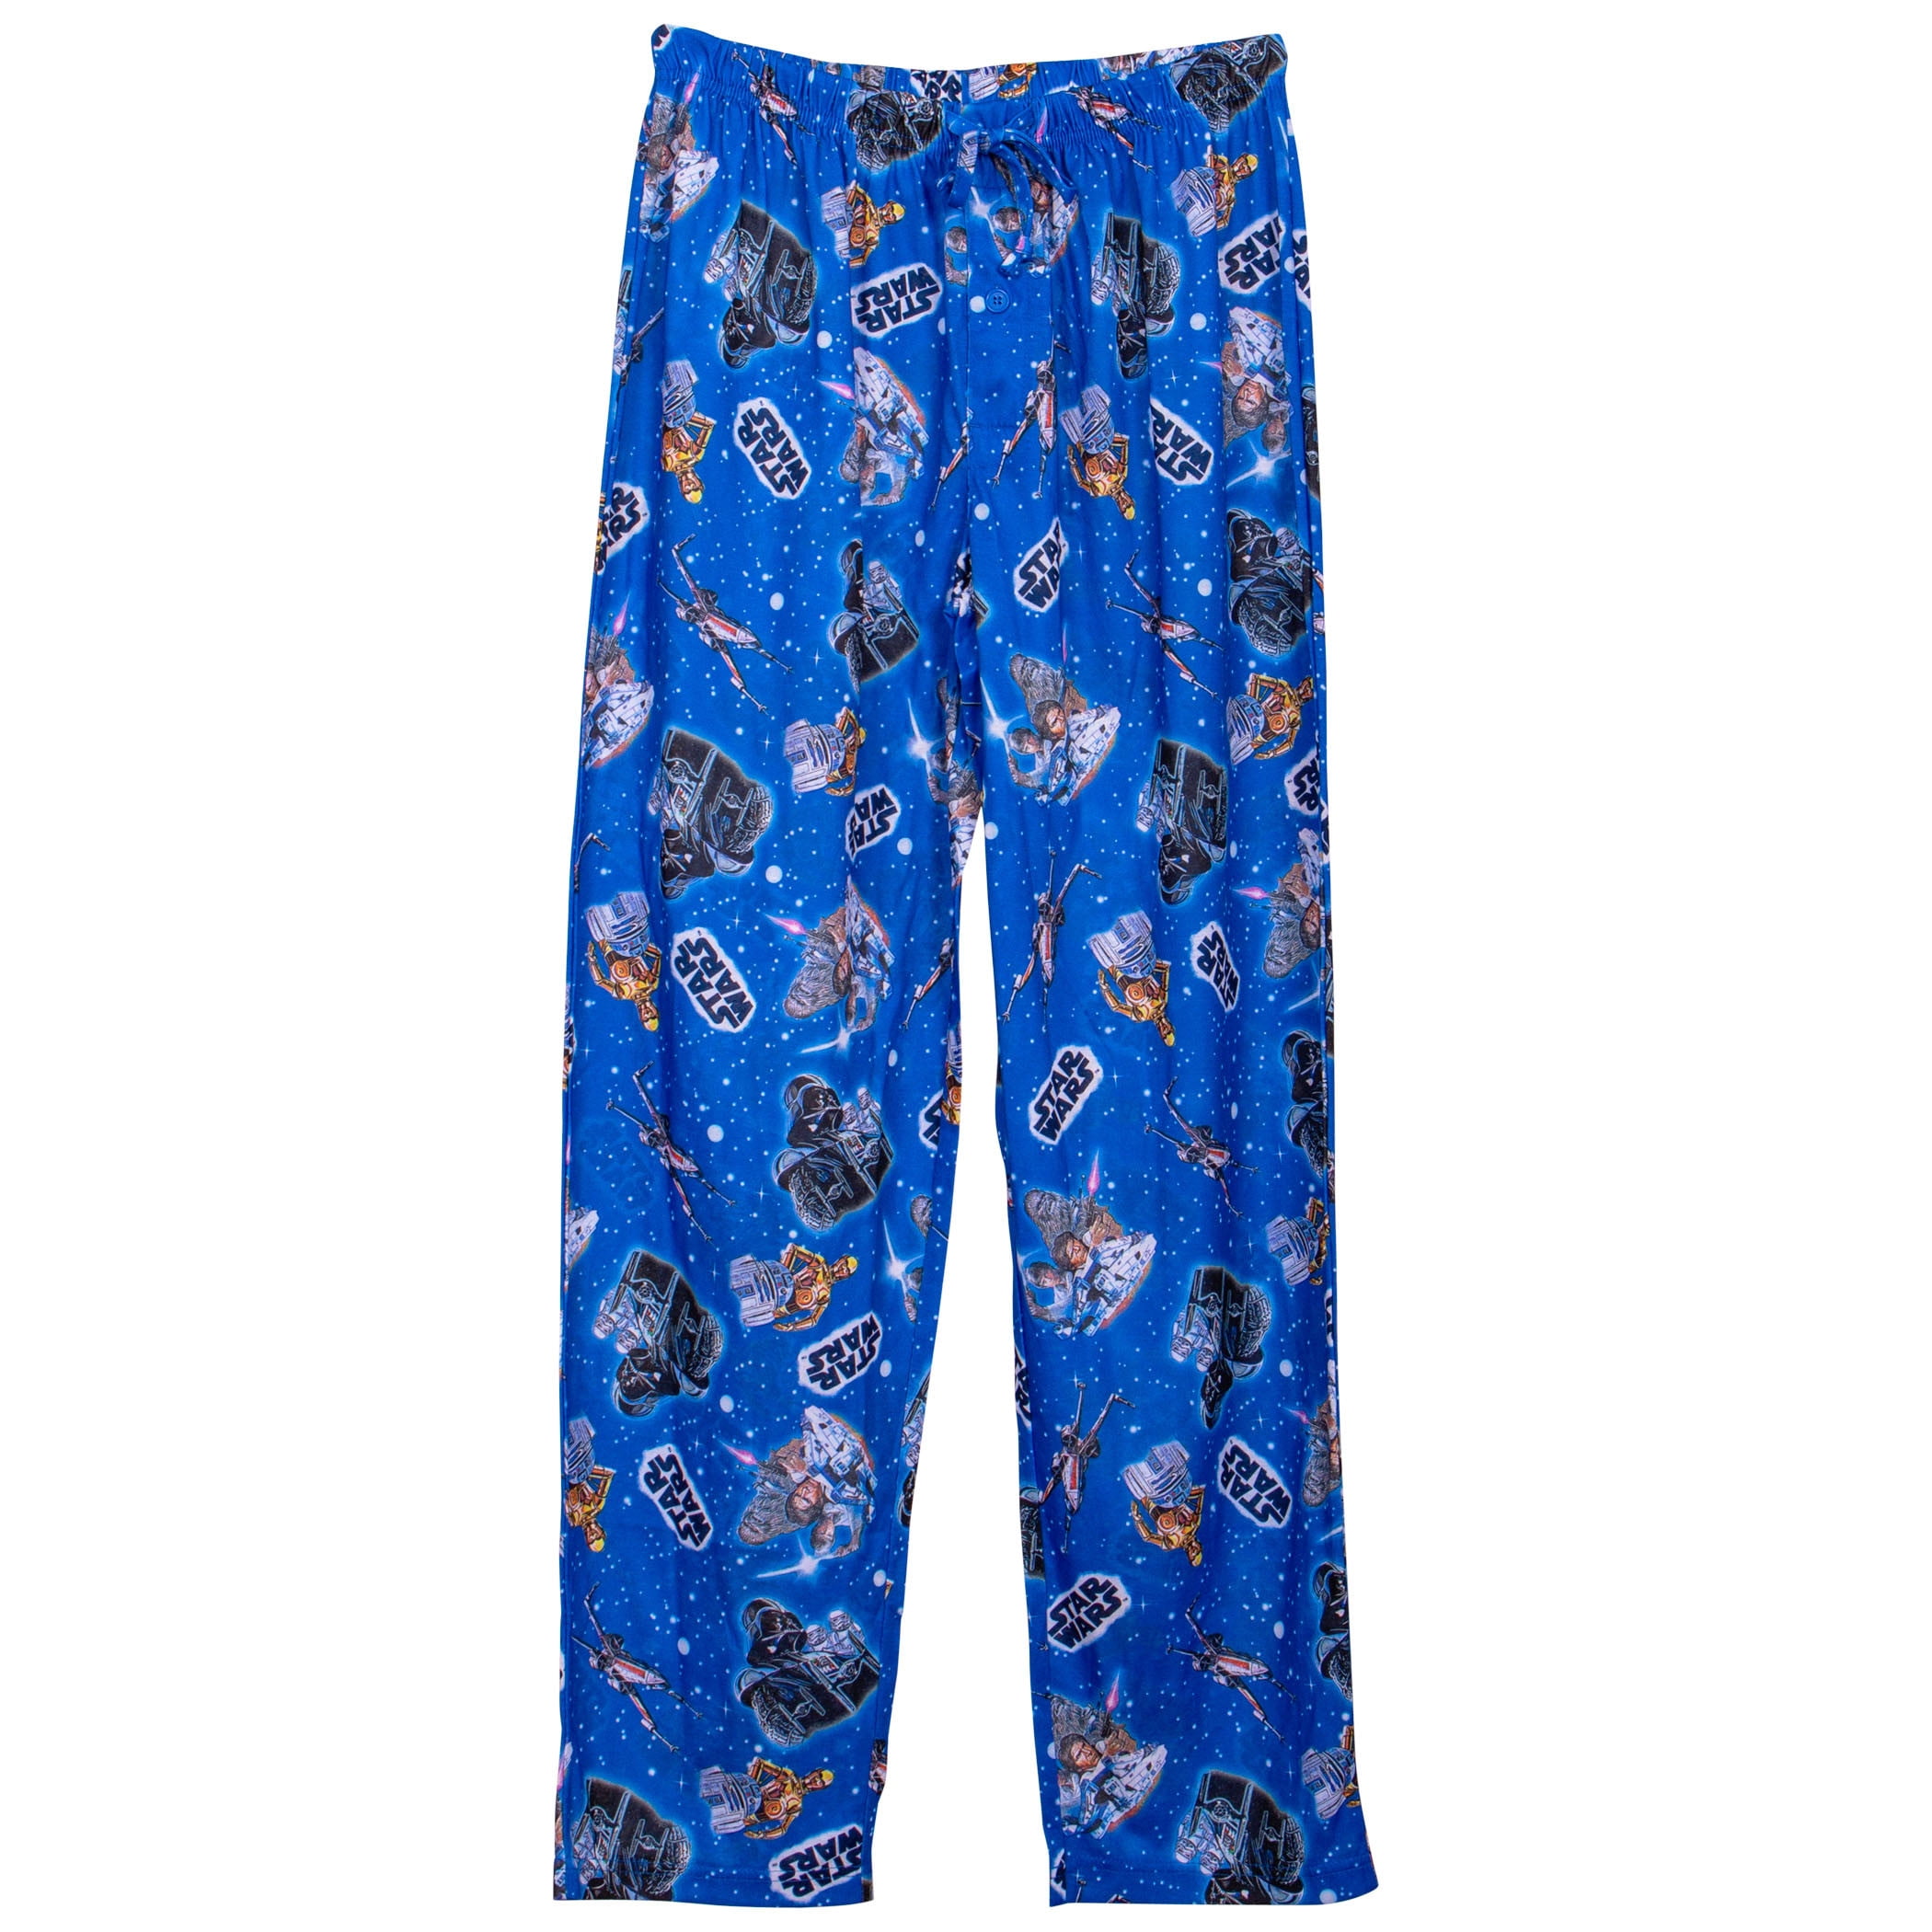 STAR WARS by Disney Knit Pajama Pants Lounge PJ's by Disney L 36/38